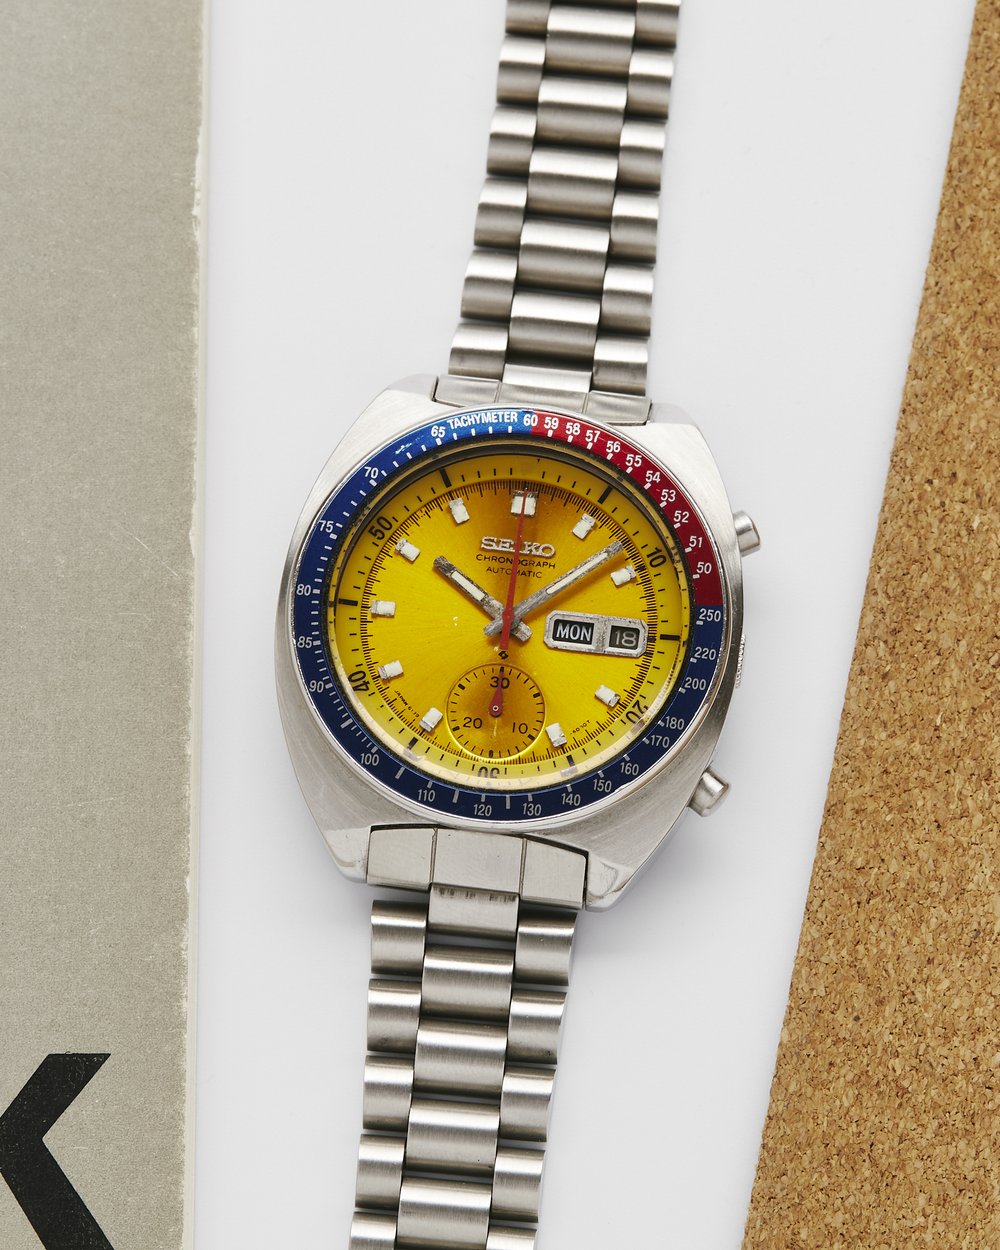 Seiko Pogue Chronograph ref. 6139-6002 — Those Watch Guys